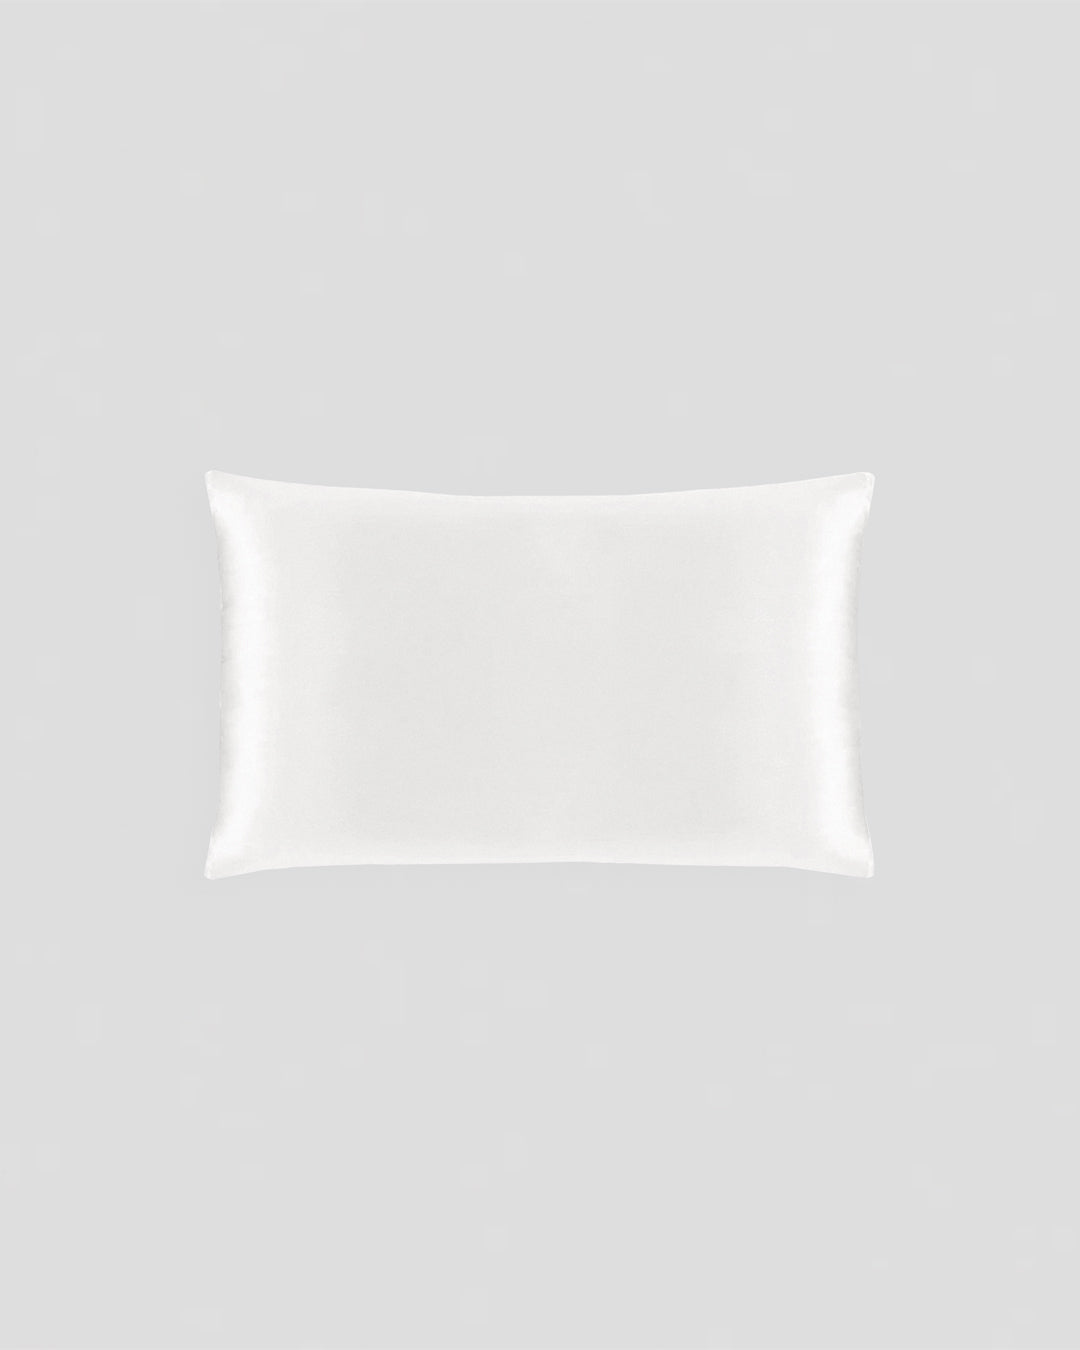 Bacteria-repelling Silvon Silk Pillowcase